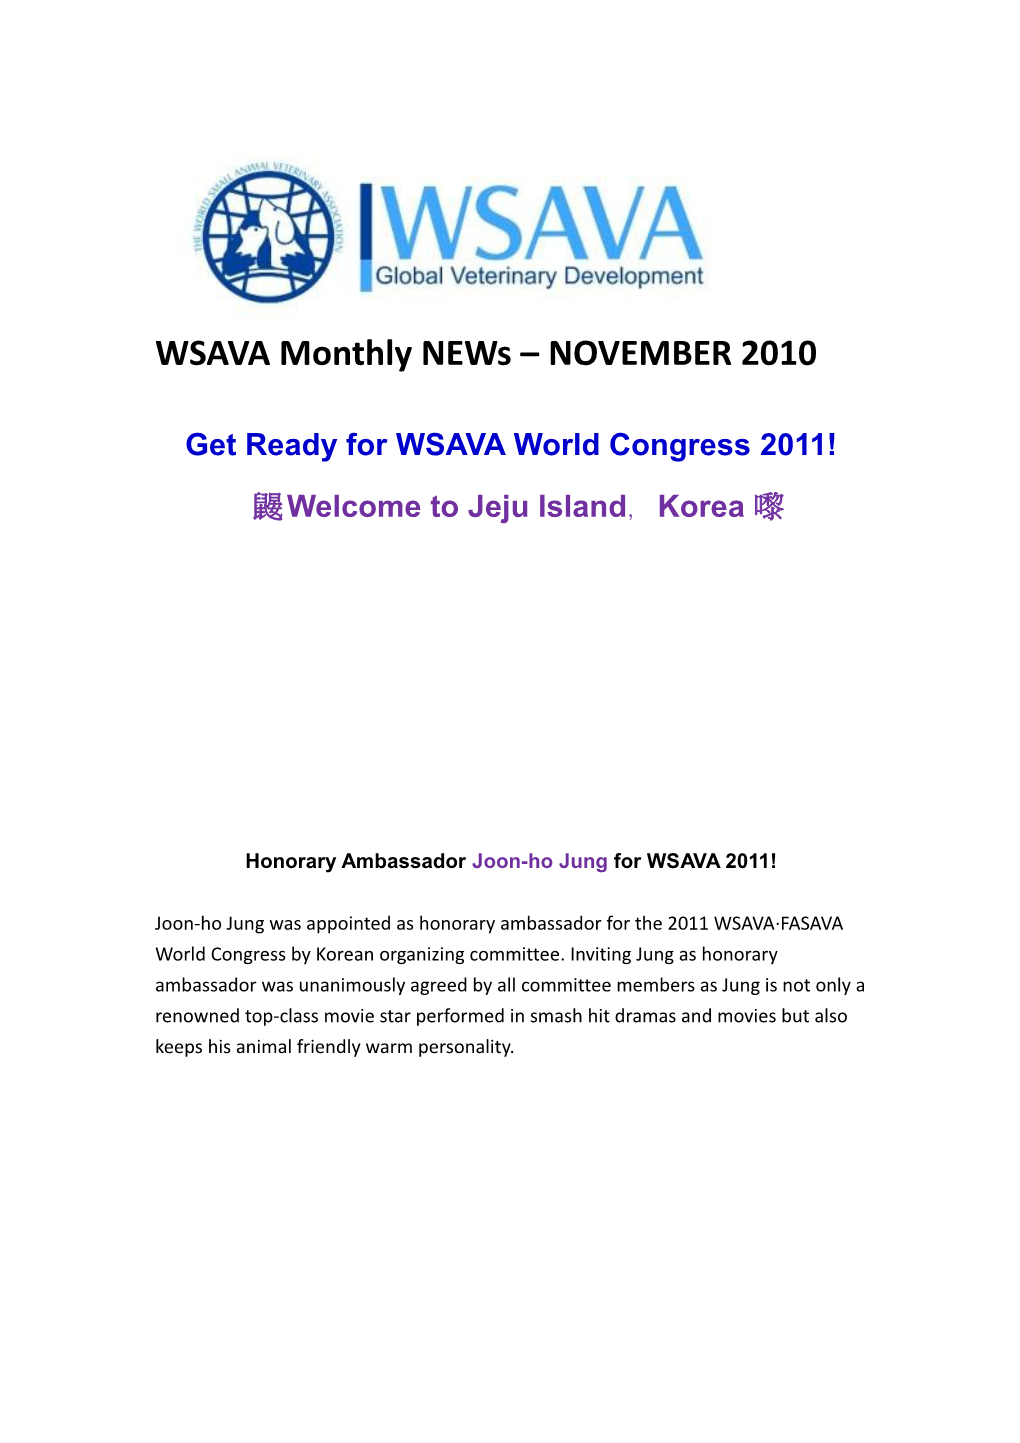 Get Ready for WSAVA World Congress 2011!